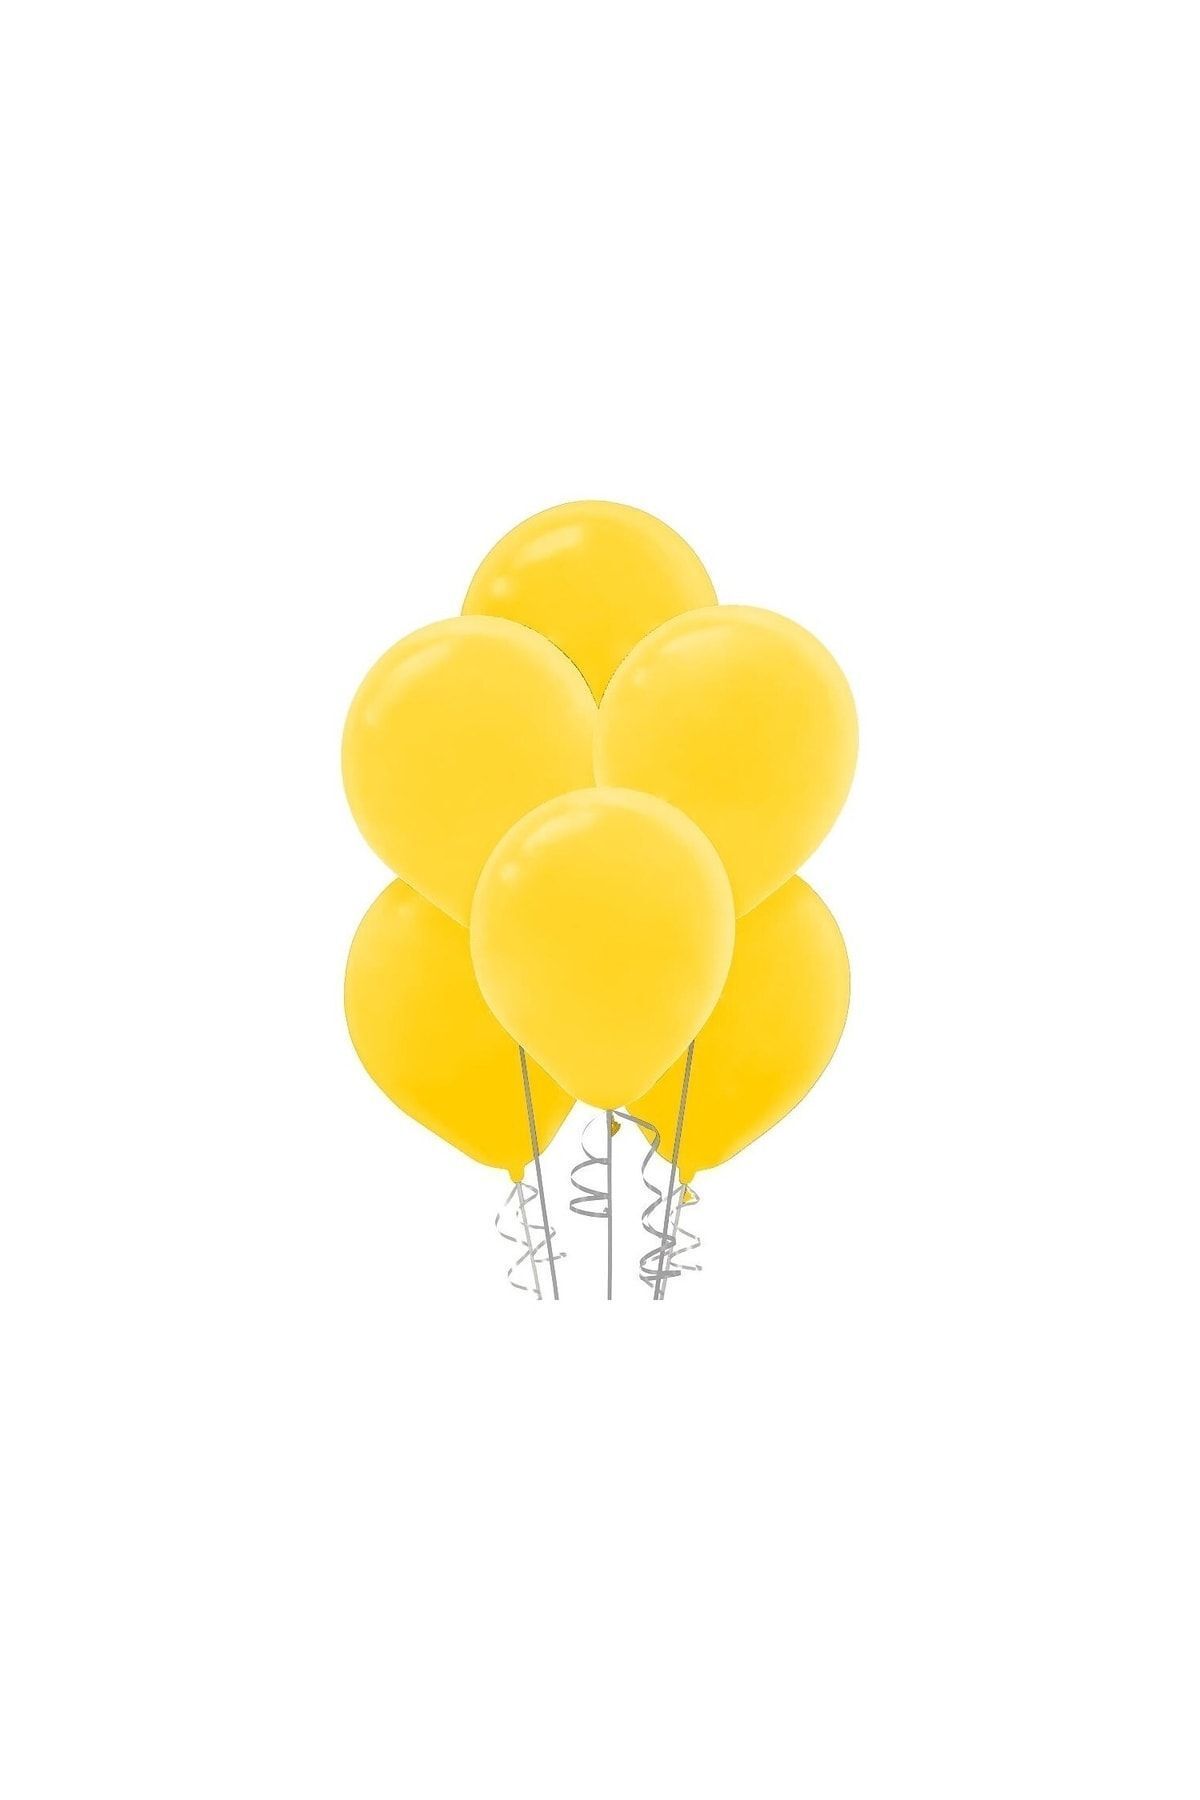 HKNYS 100 Adet Sarı Renk Pastel Balon-+ Balon Zinciri Balon Bandı